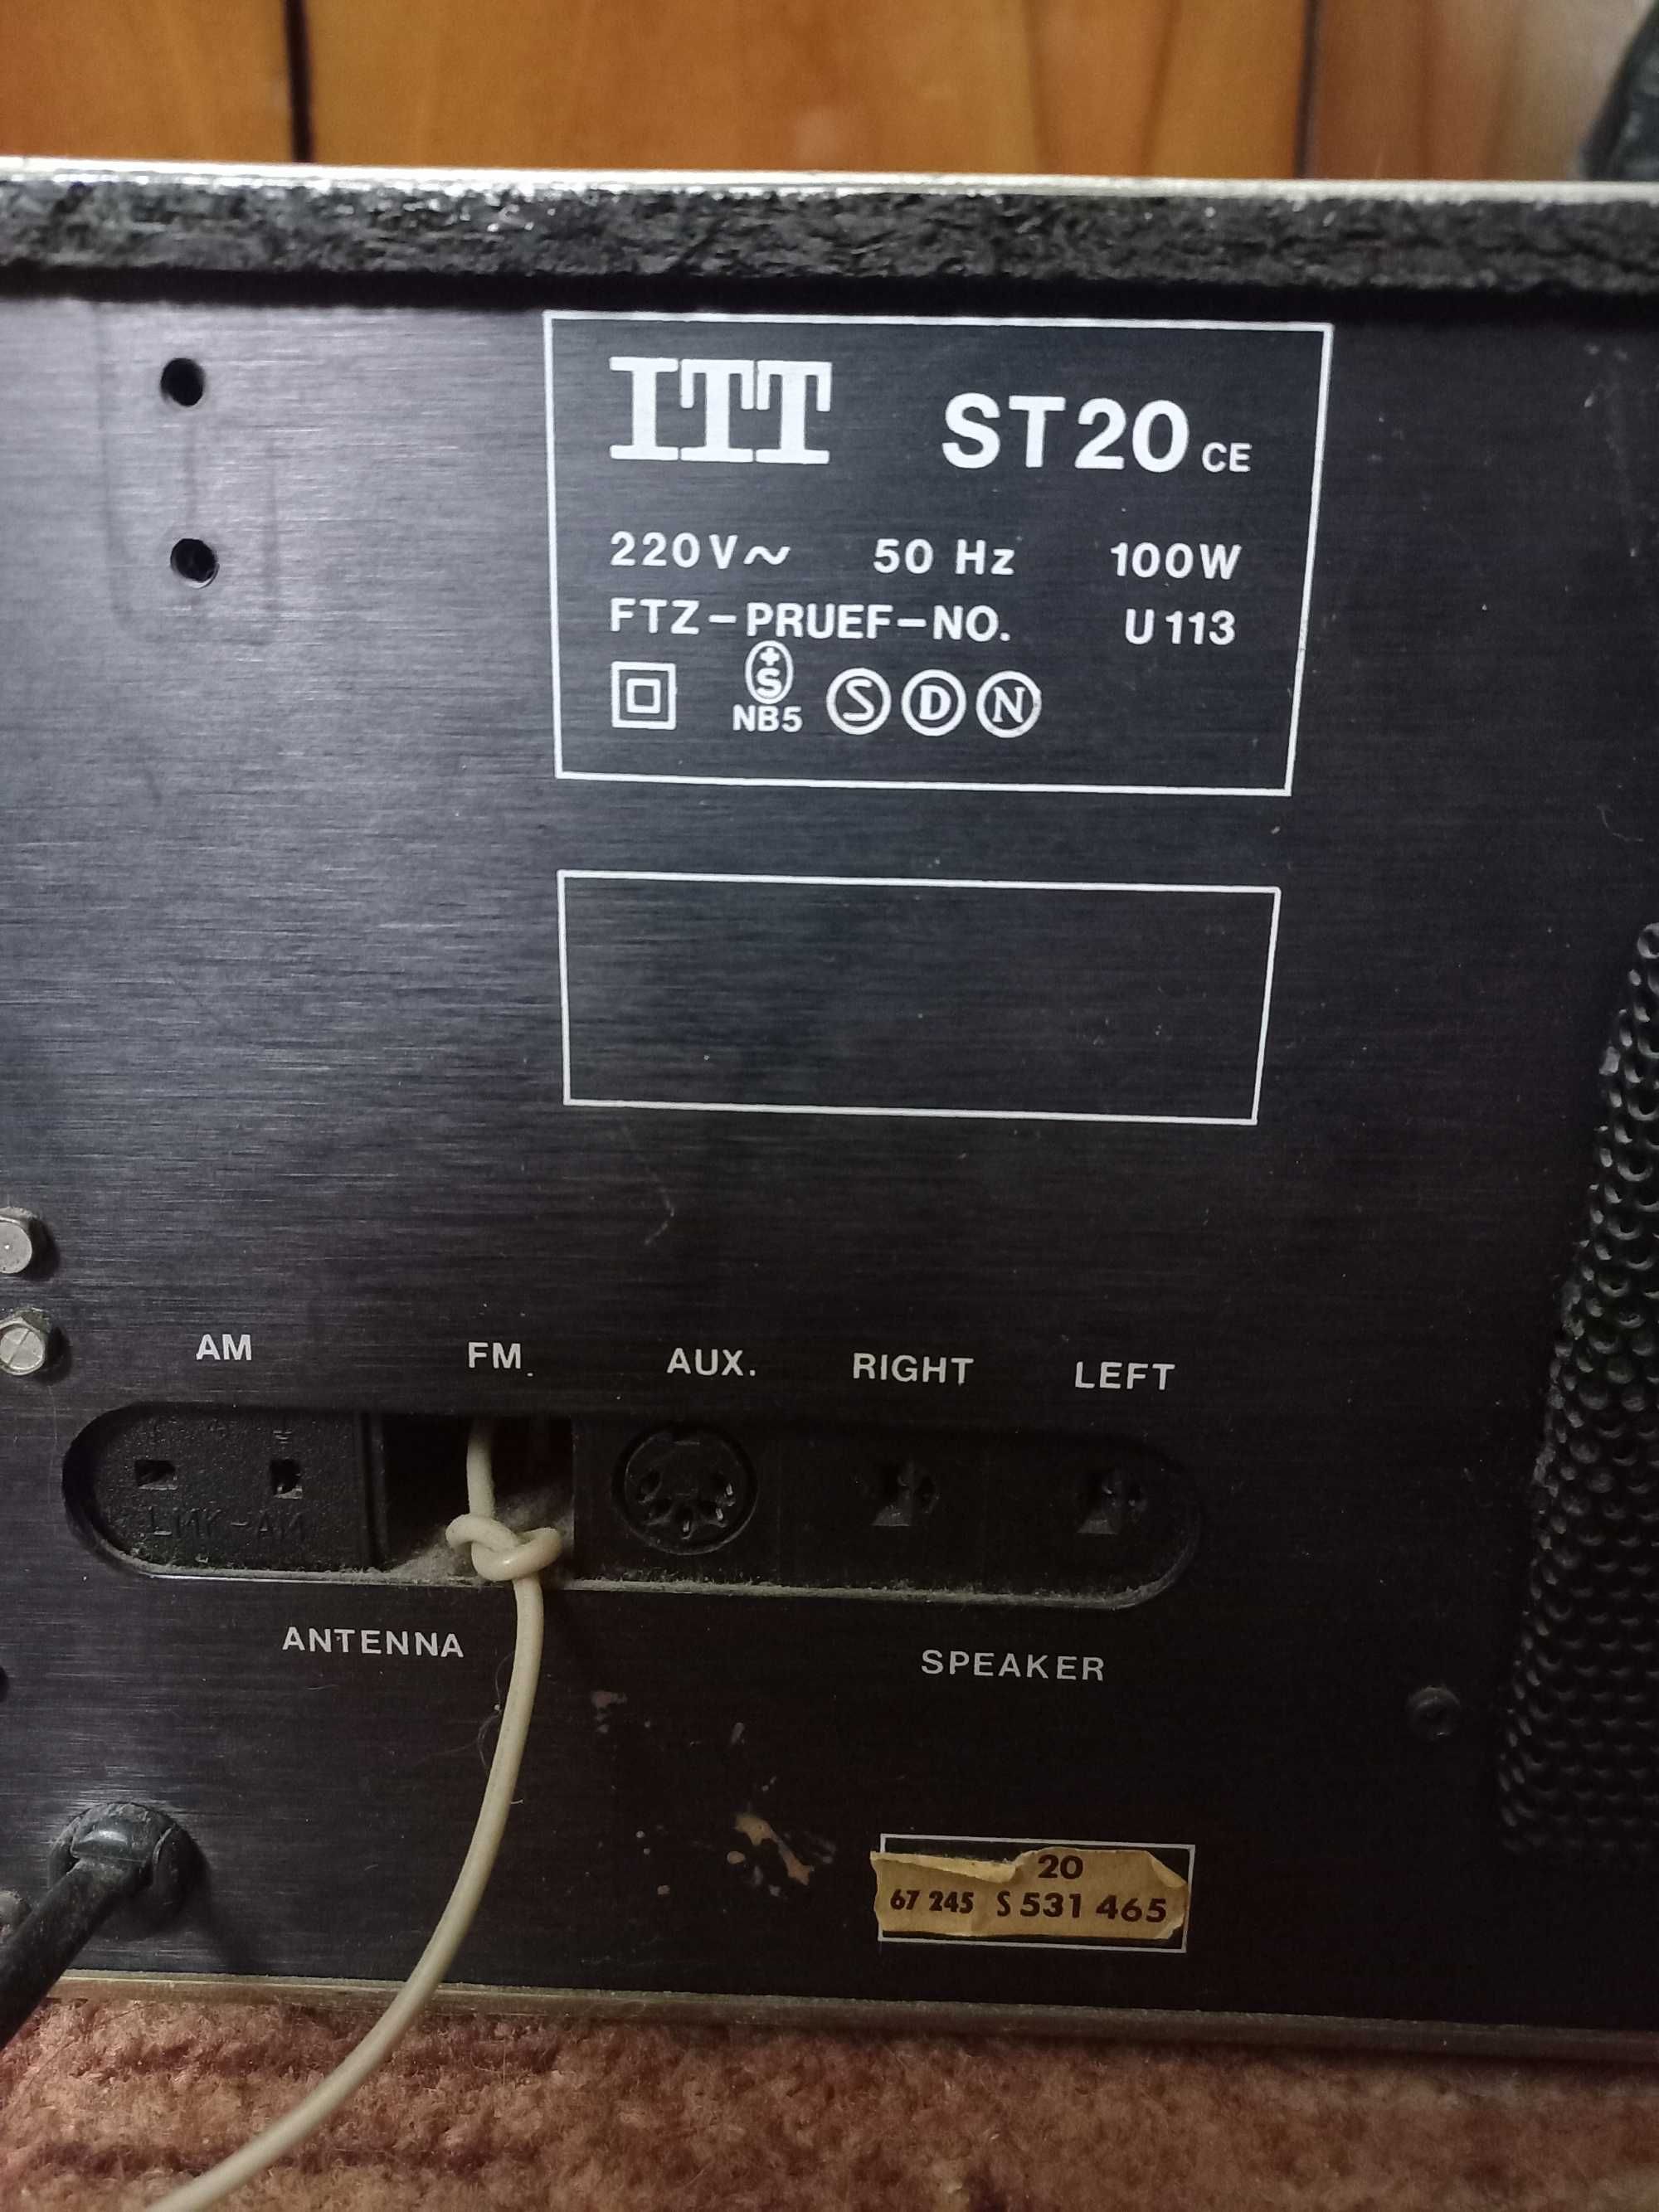 ITT ST 20 Stereo compact system